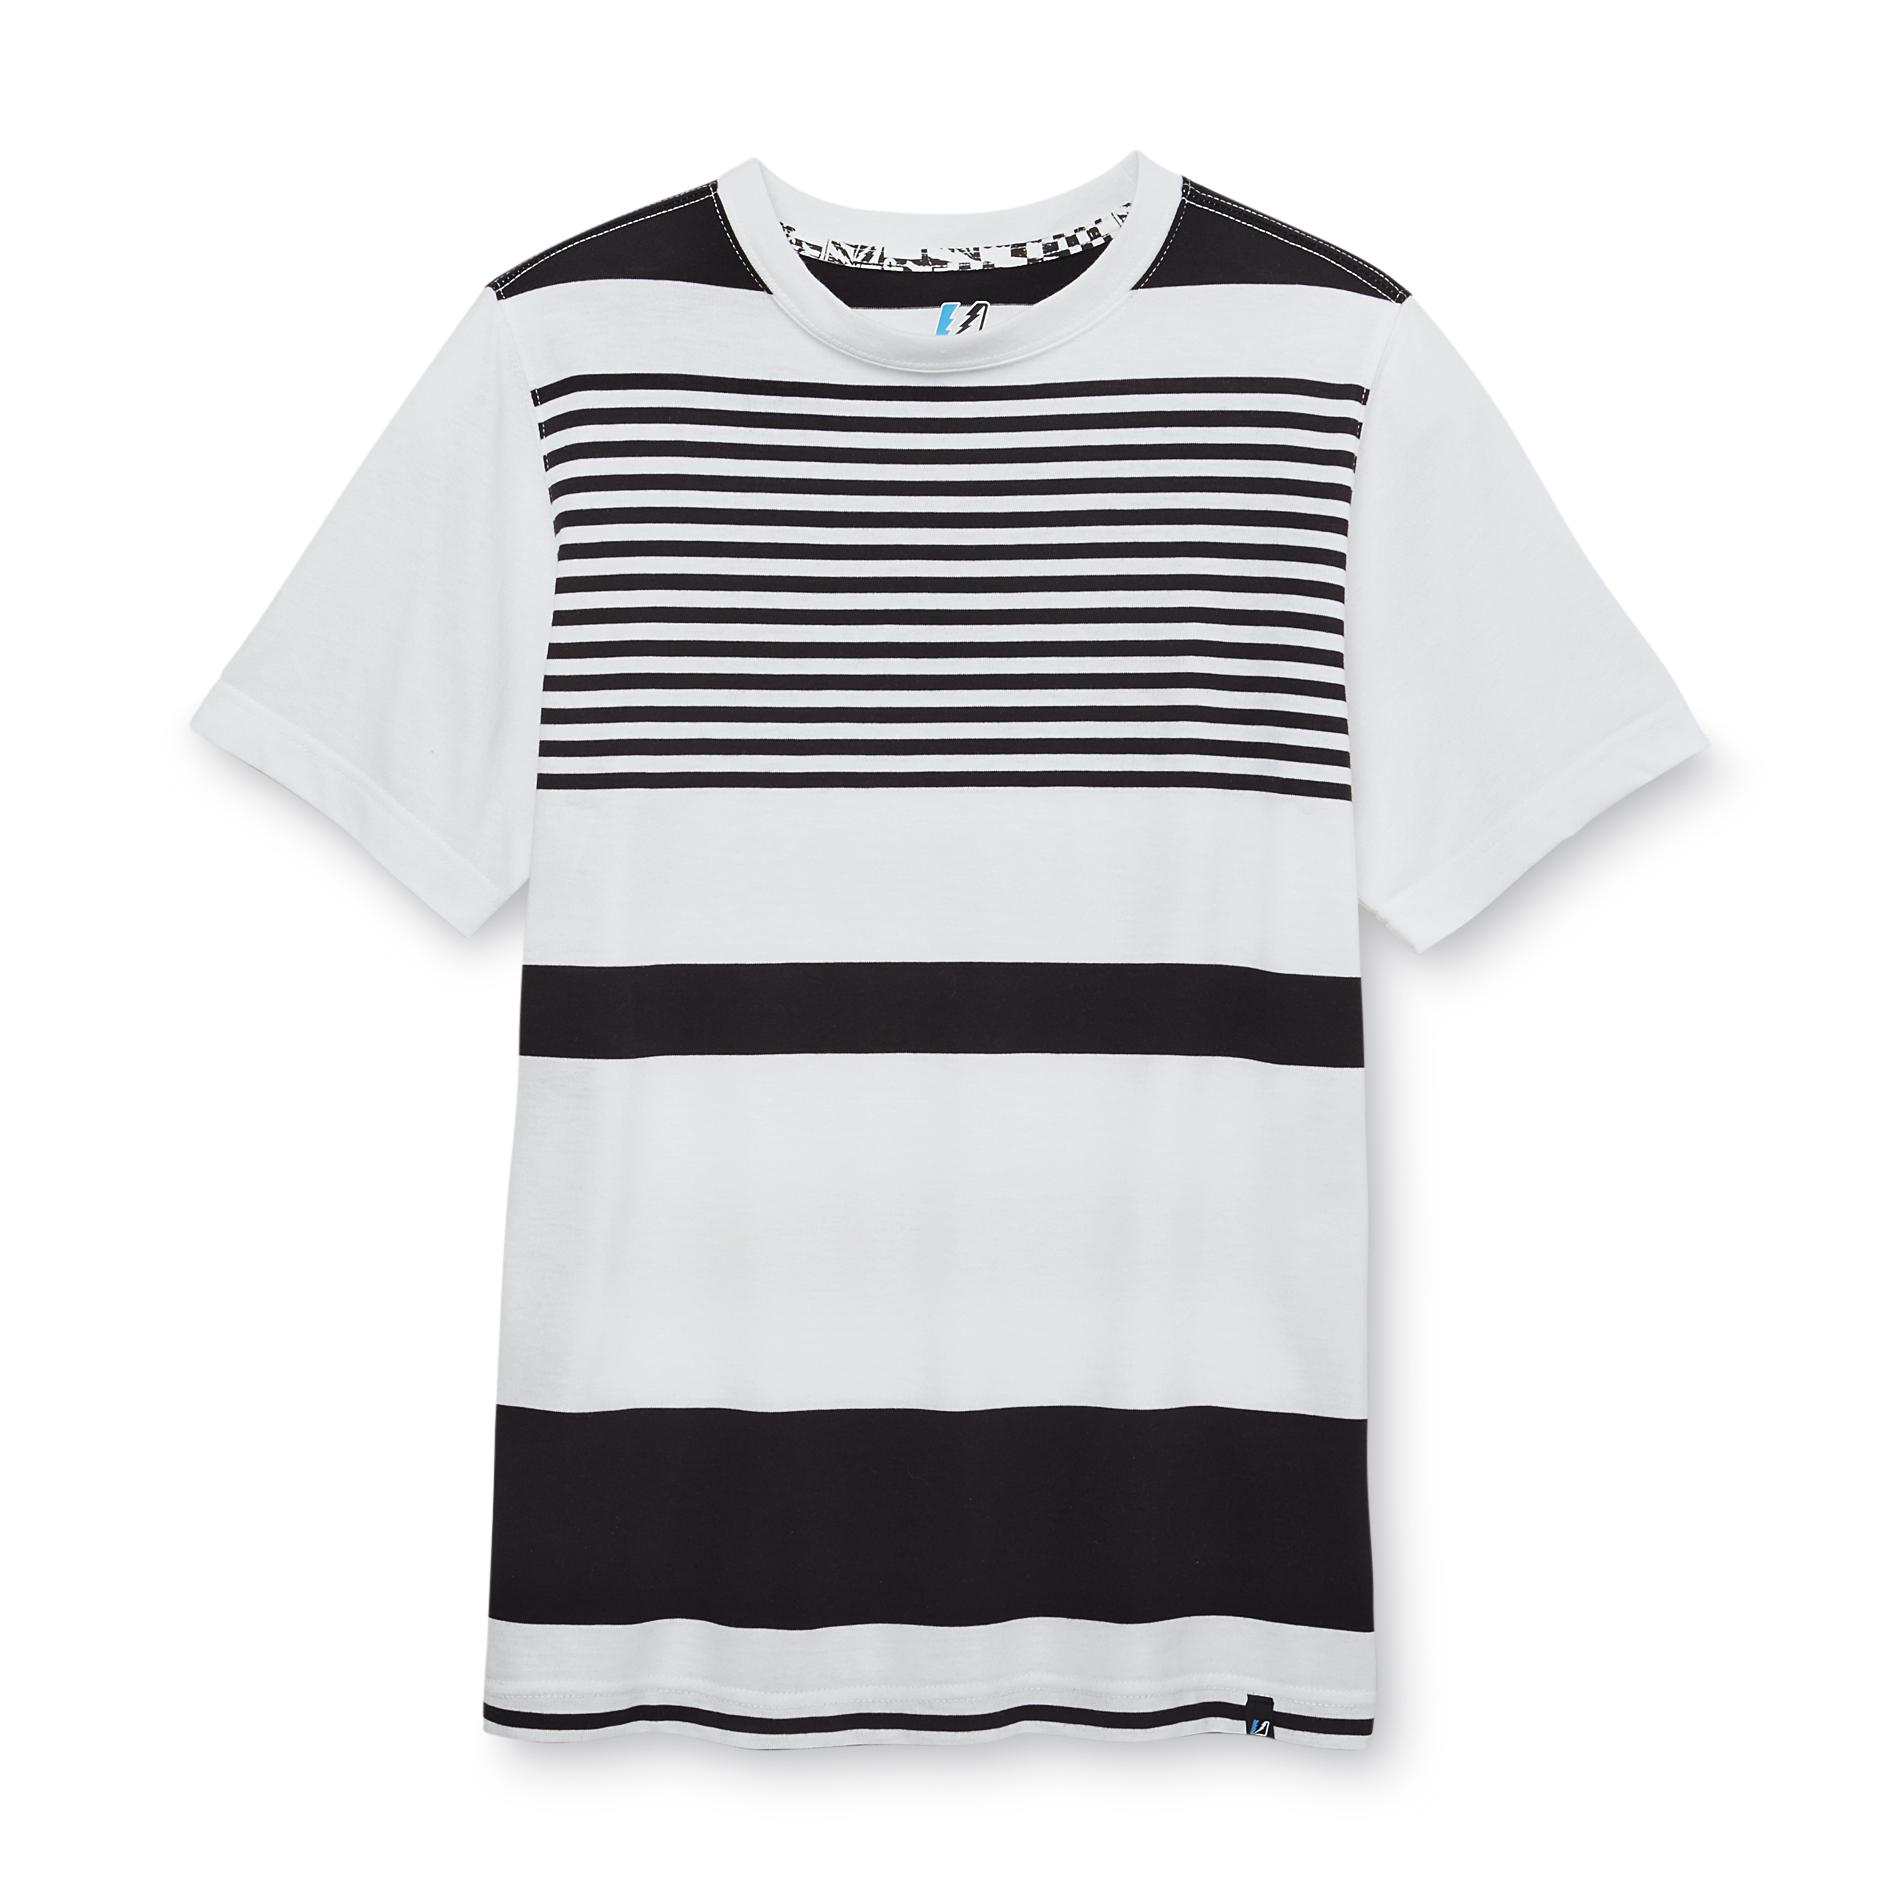 Amplify Boy's T-Shirt - Striped